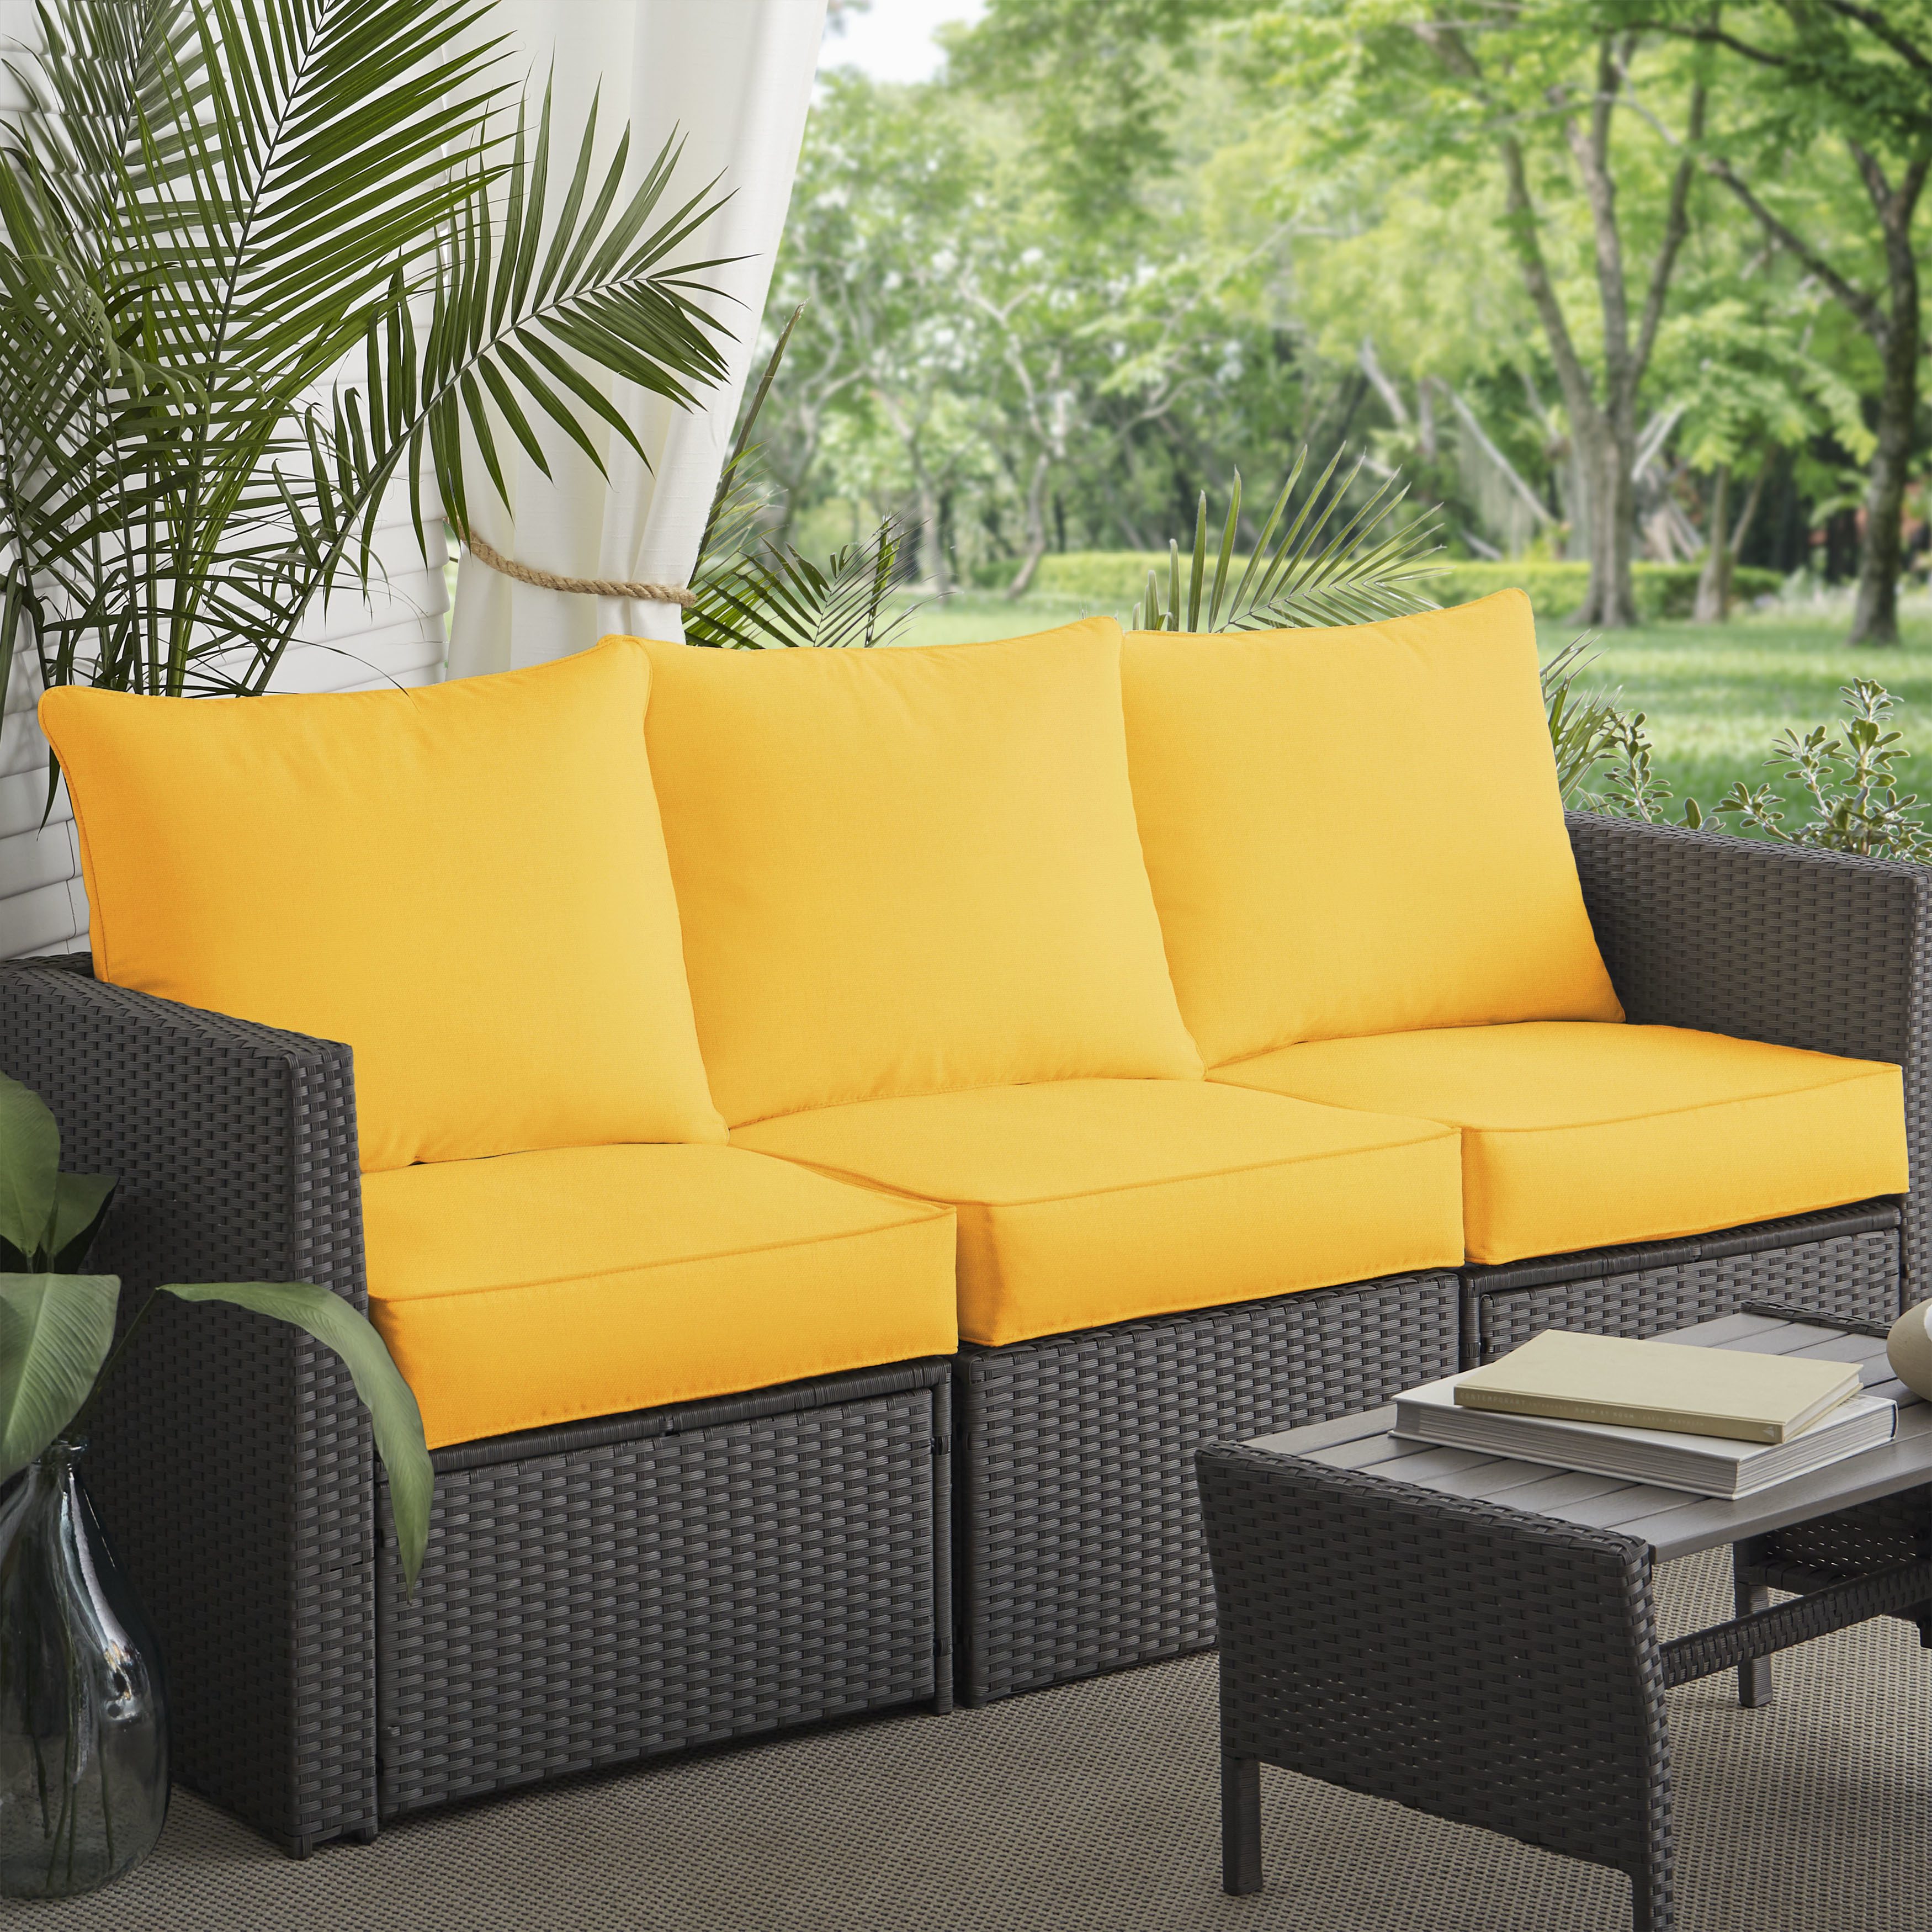 cushions for yellow sofa